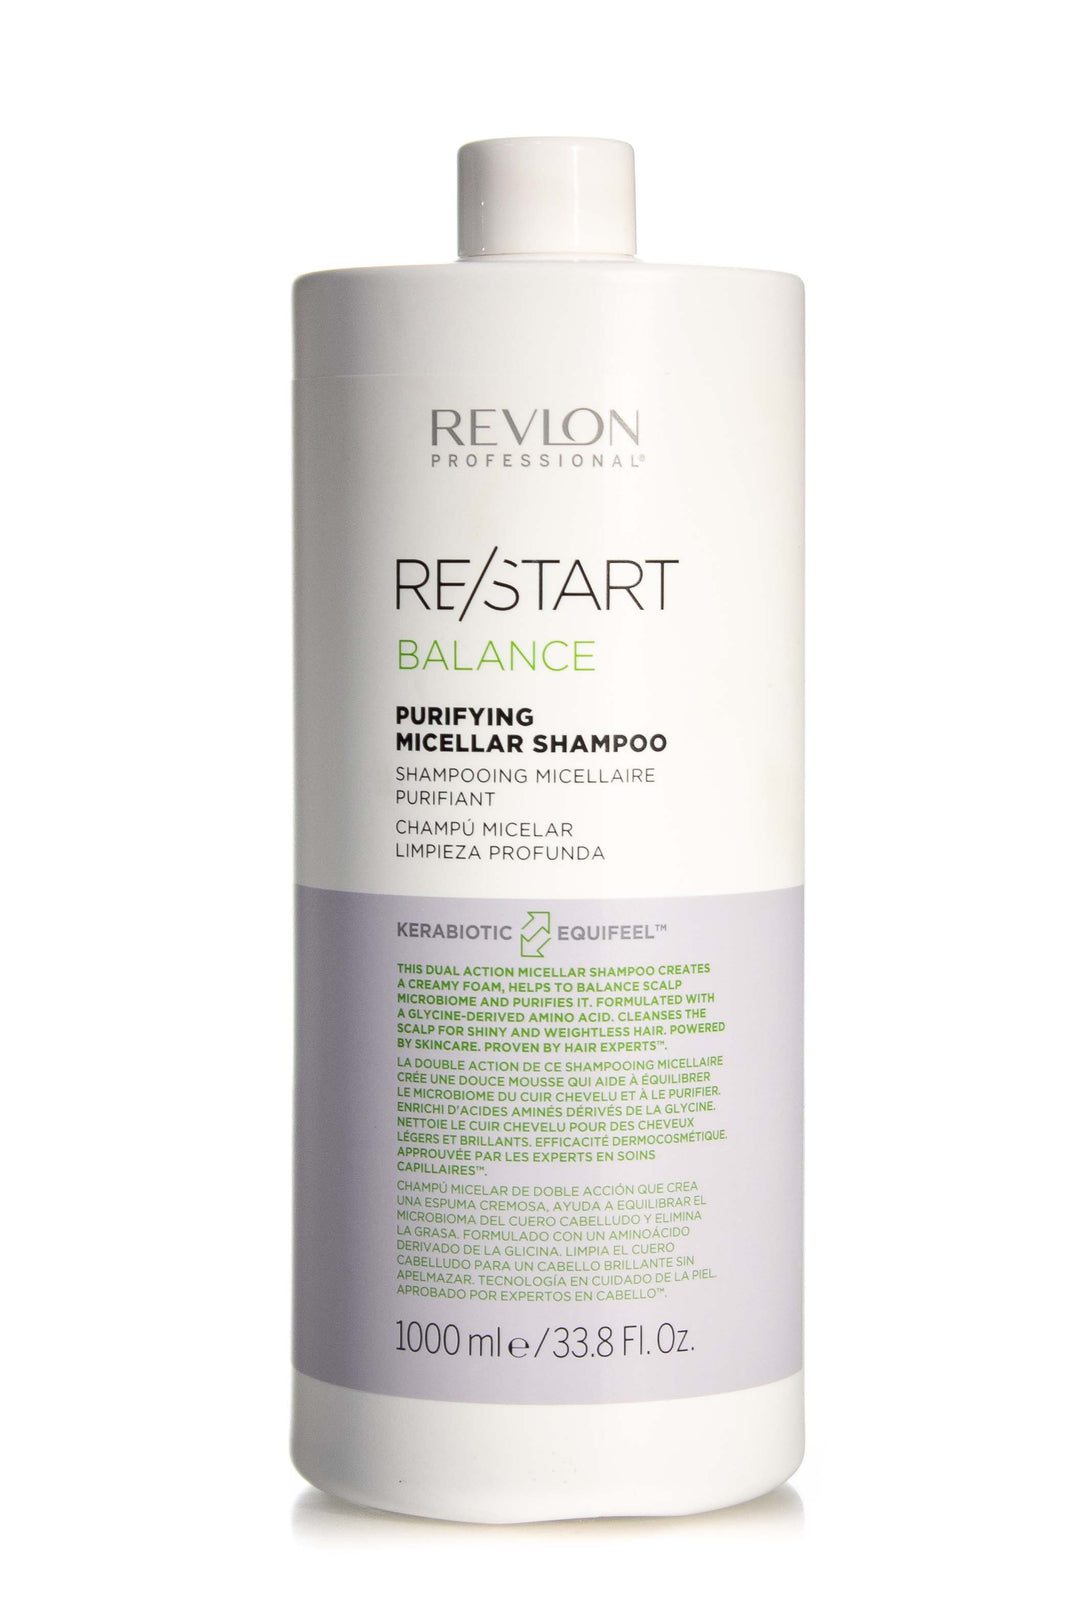 Shampoo REVLON Balance RESTART Salon Sizes Hair Micellar – Purifying Various Care |